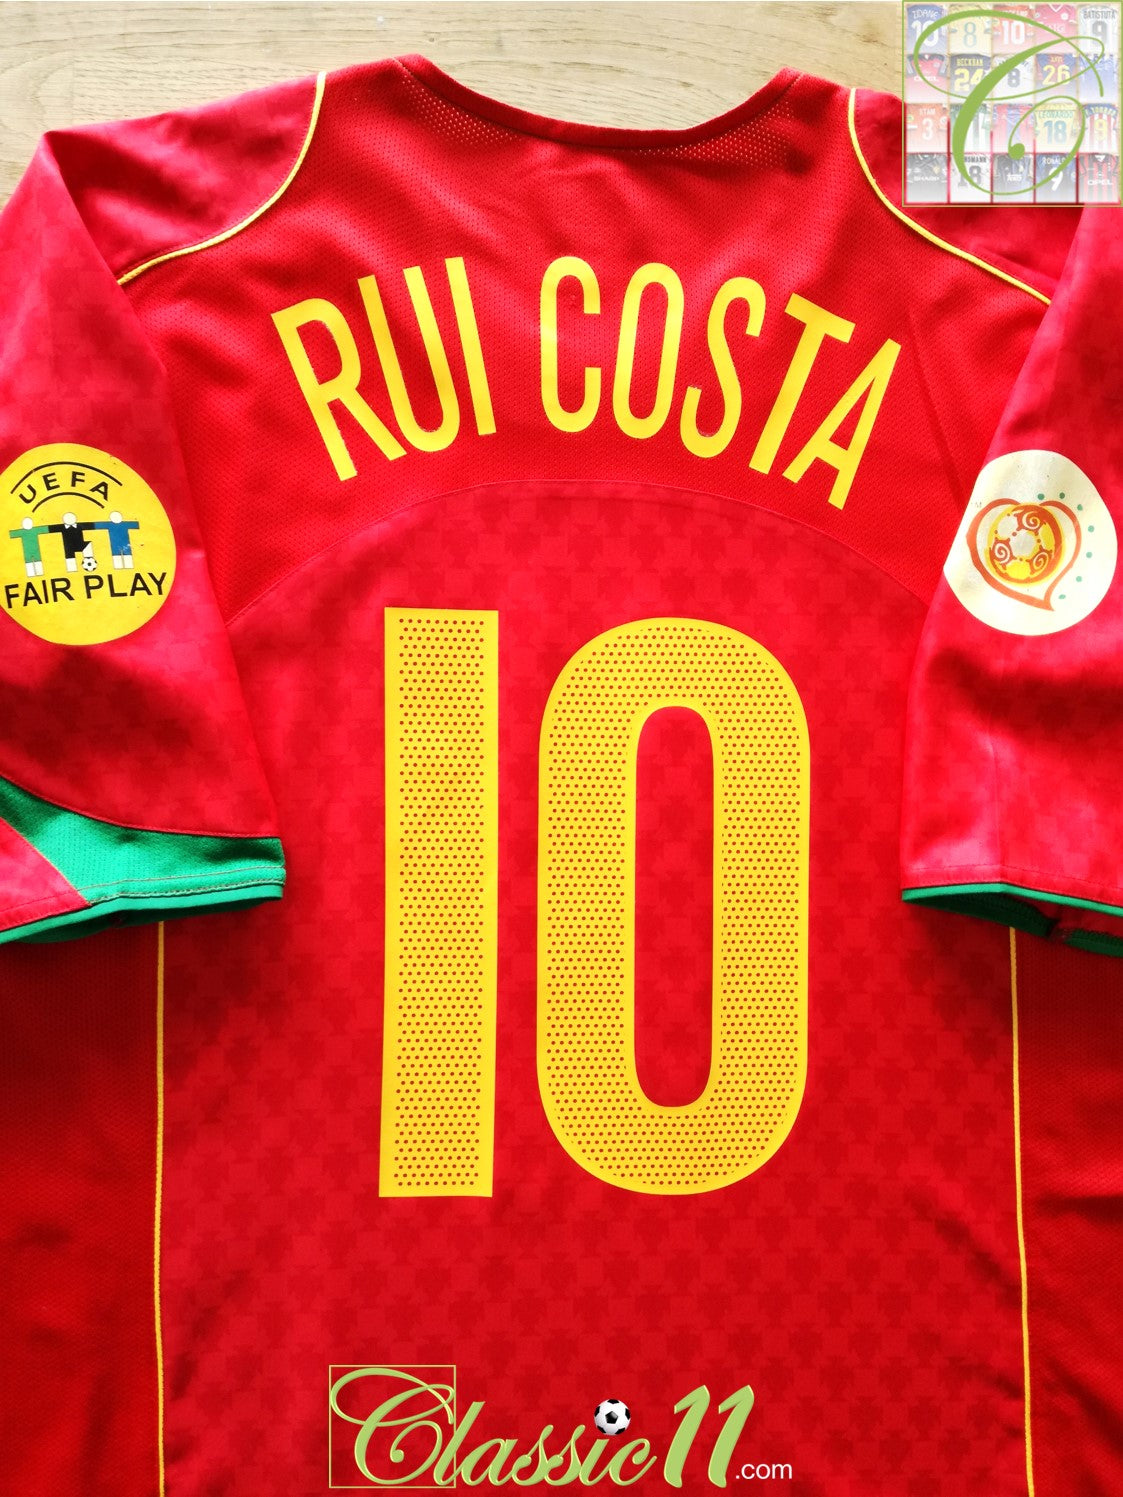 Rui Costa Portugal classic jersey